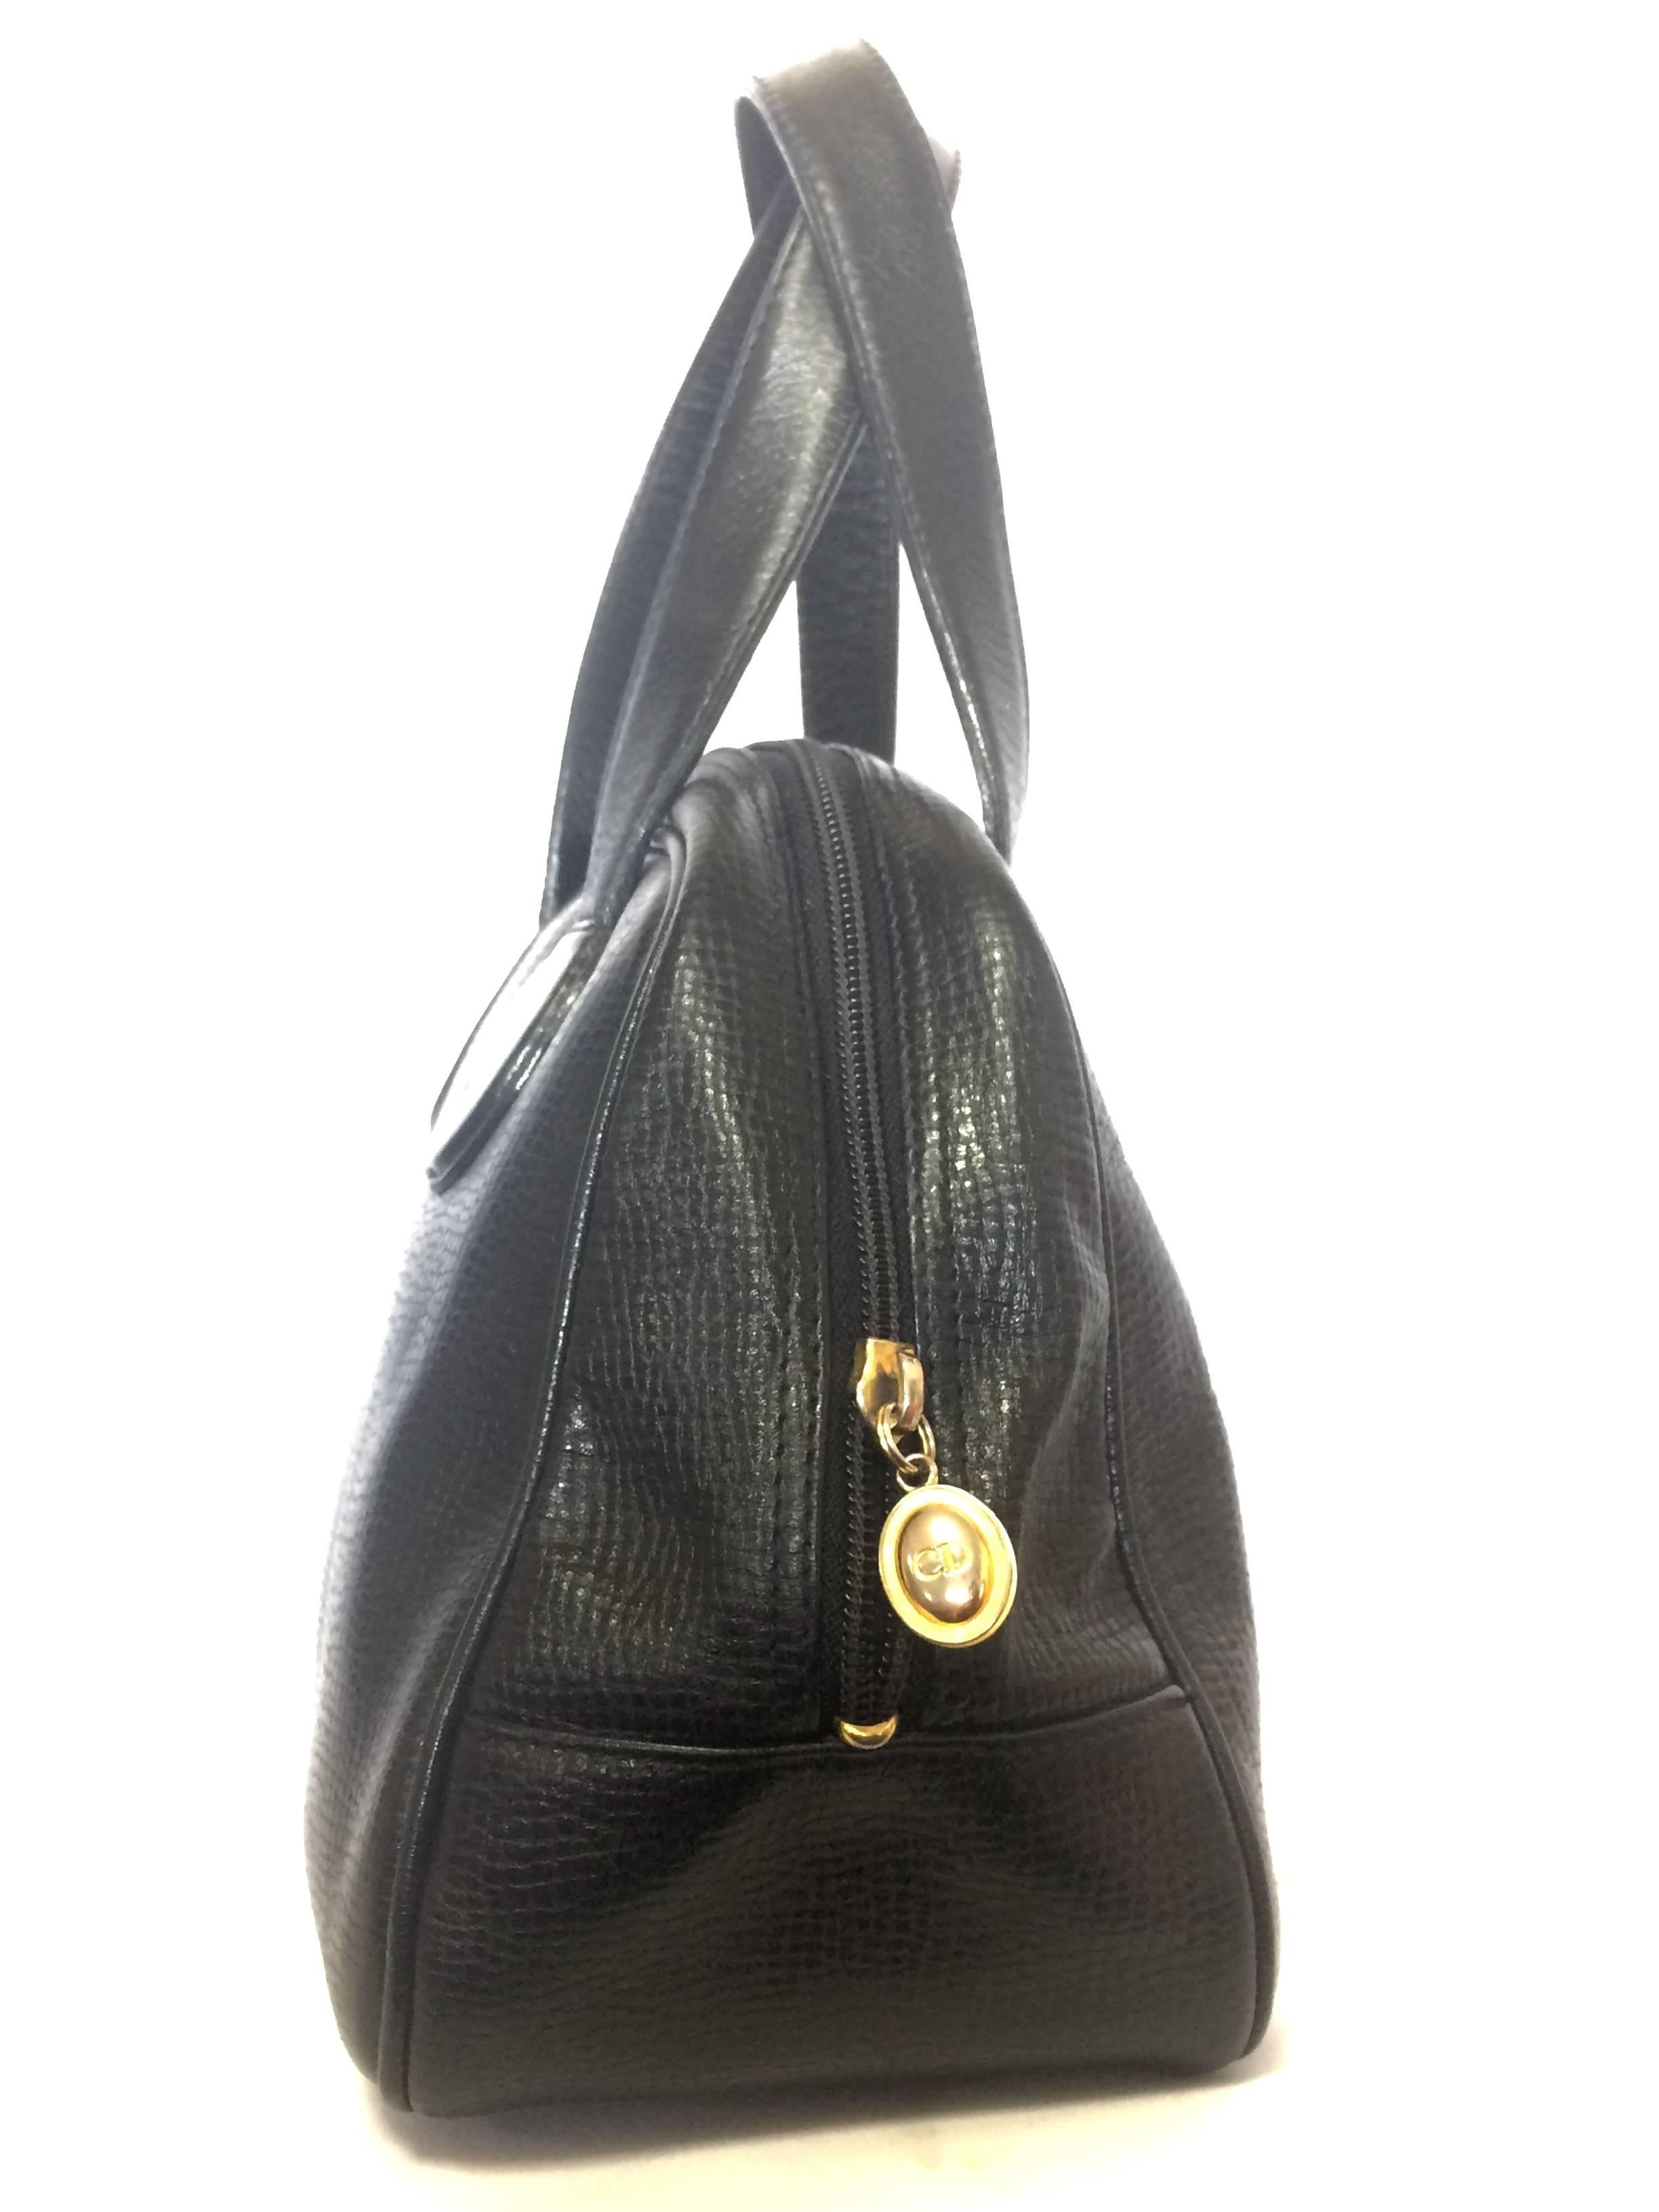 Women's Vintage Christian Dior black leather mini bolide style handbag with logo motif.